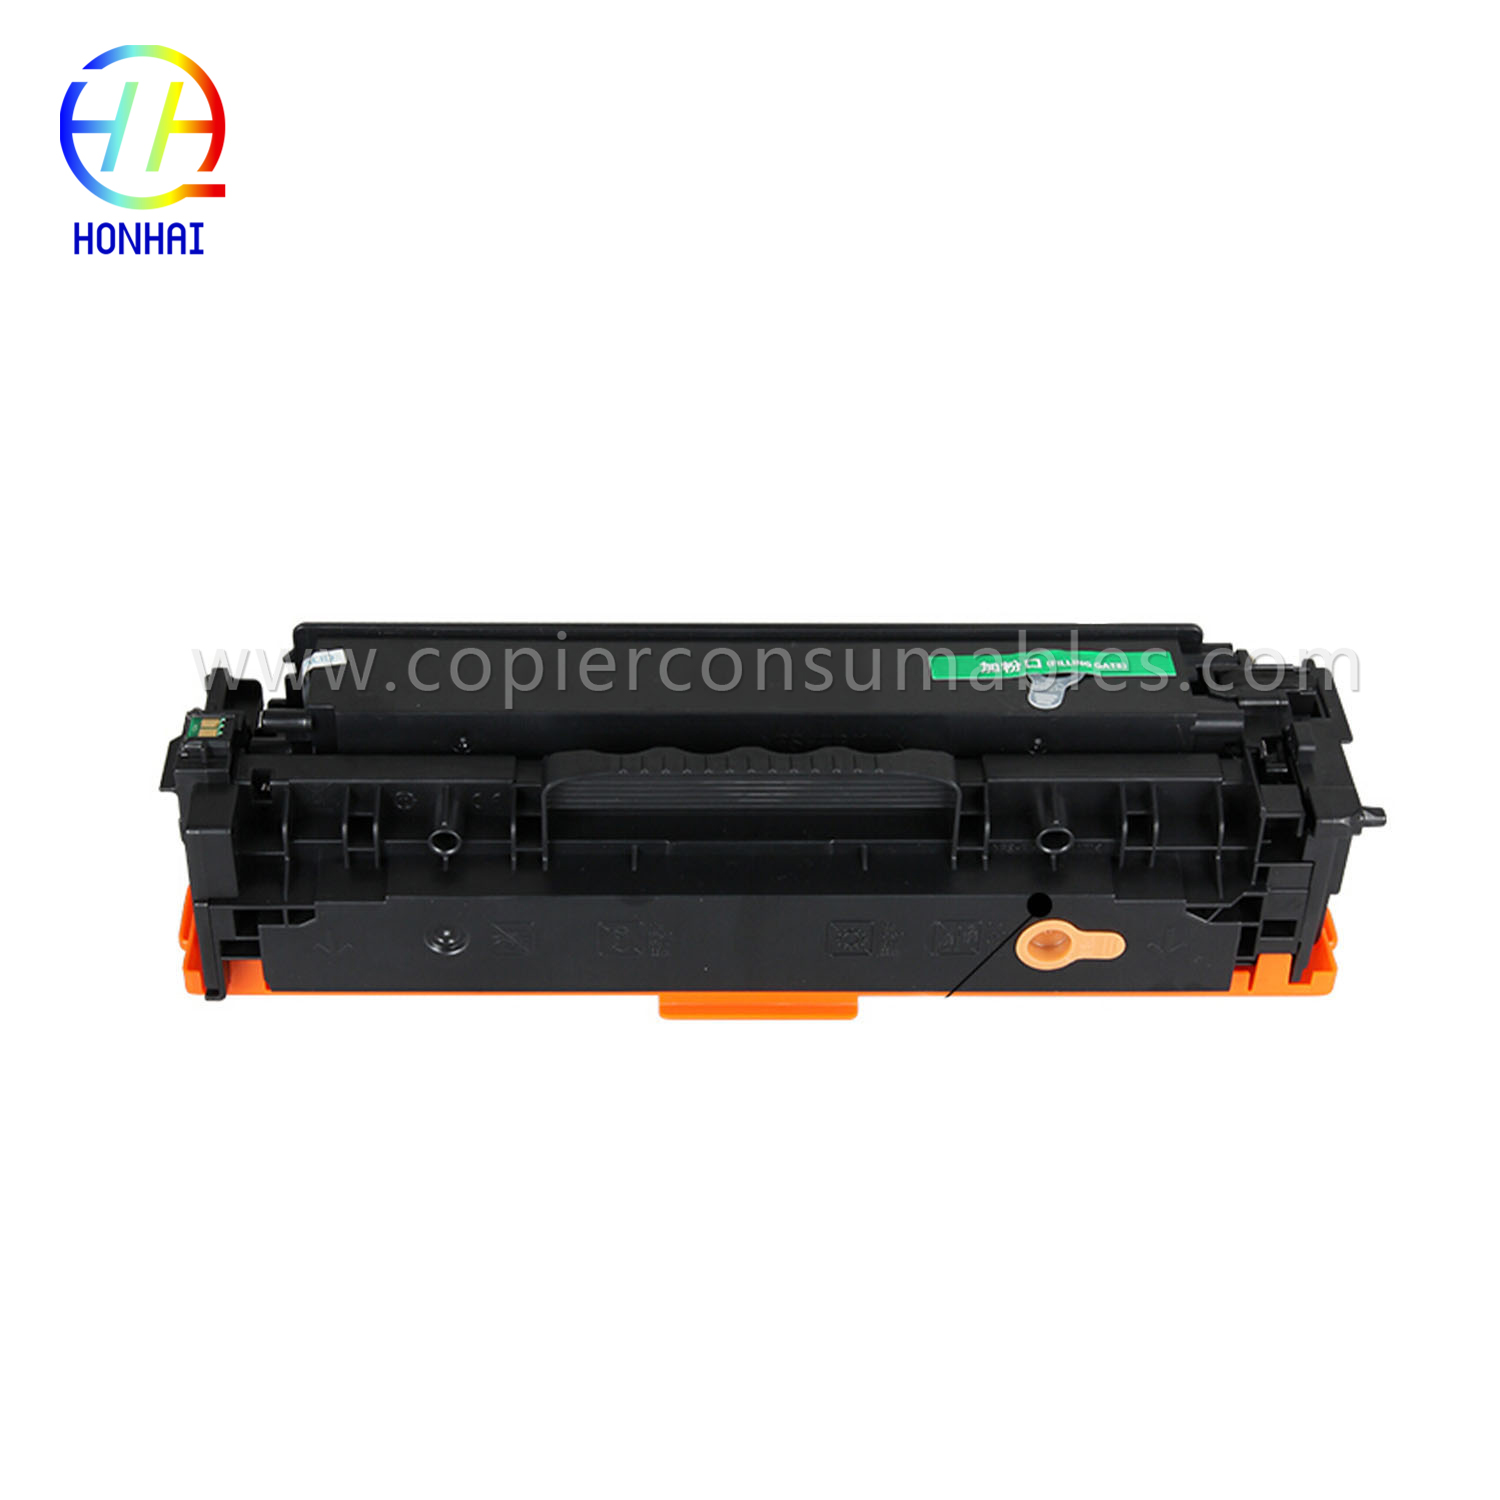 HP Laserjet PRO 400 Color Mfp M451nw M451DN M451dw PRO 300 Color Mfp M375nw (CE410A) အတွက် တိုနာကတ်ထရစ်